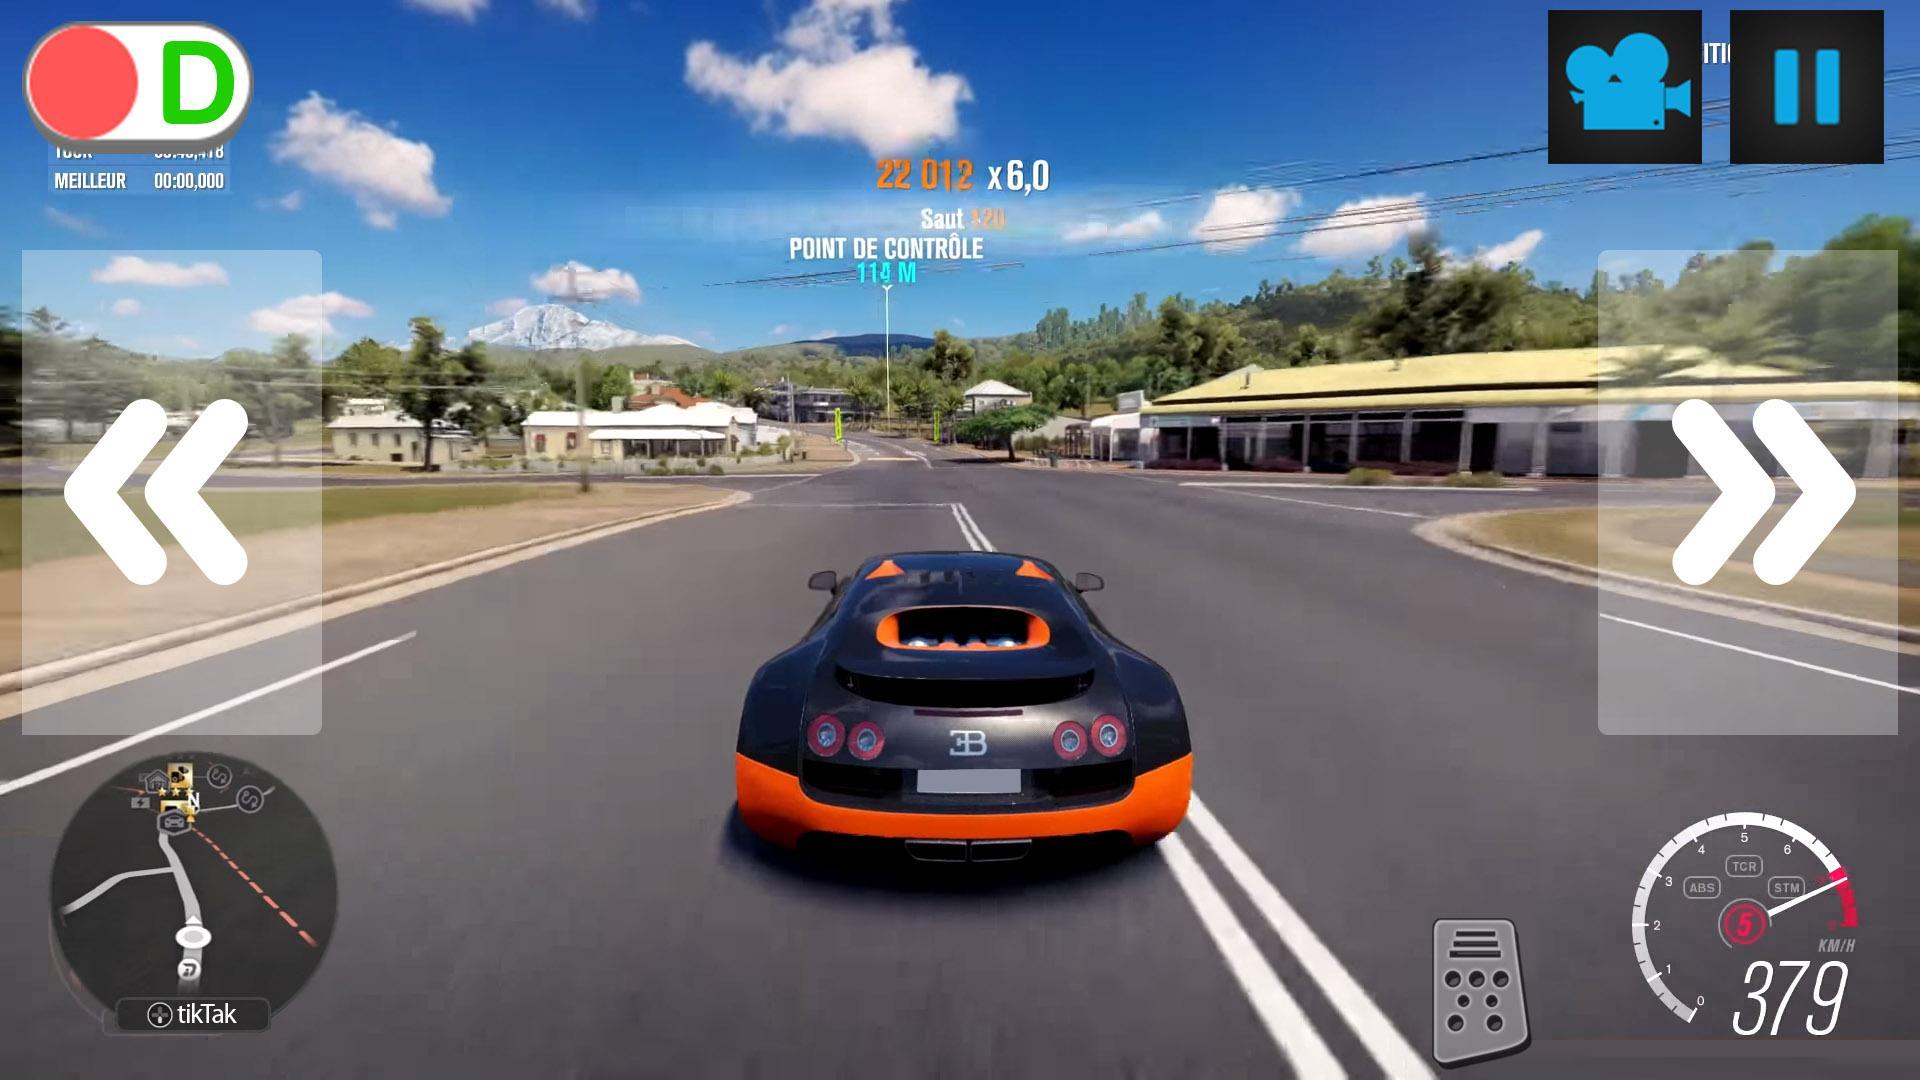 City Driver Bugatti Veyron Simulator For Android Apk Download - roblox vehicle simulator bugatti veyron